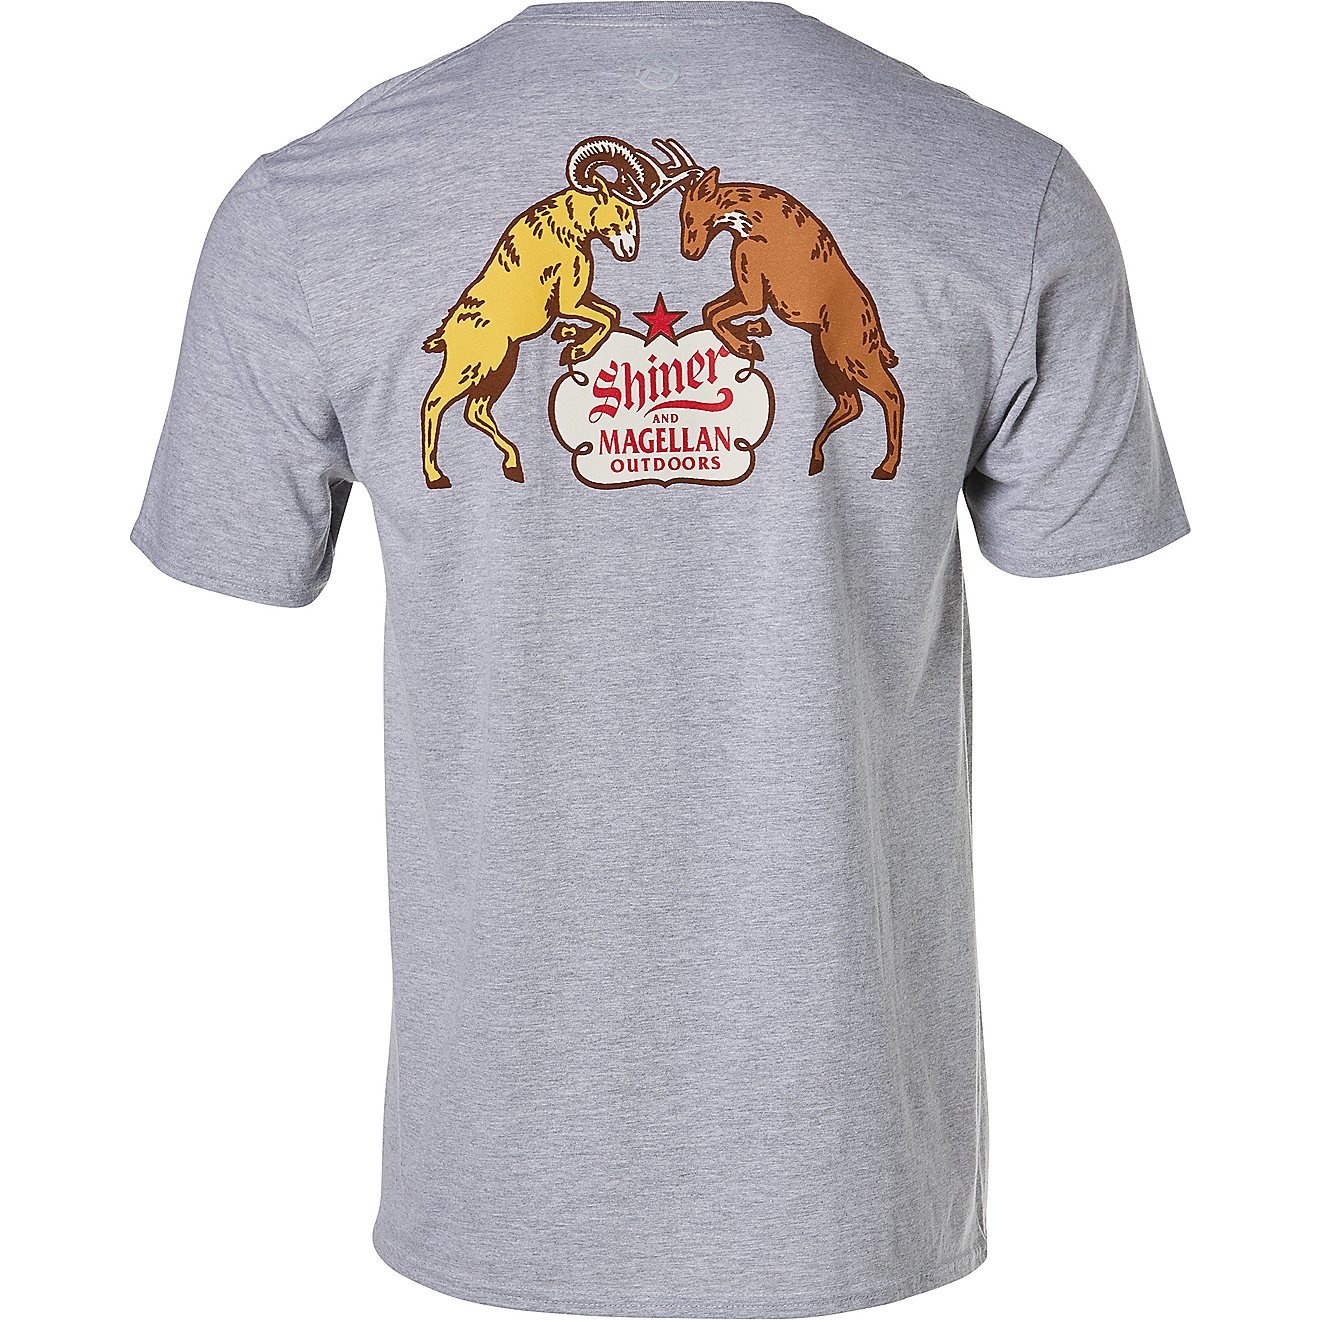 Magellan Outdoors Shiner Men's Bock Beer Ram and Deer Short Sleeve T-Shirt                                                       - view number 1